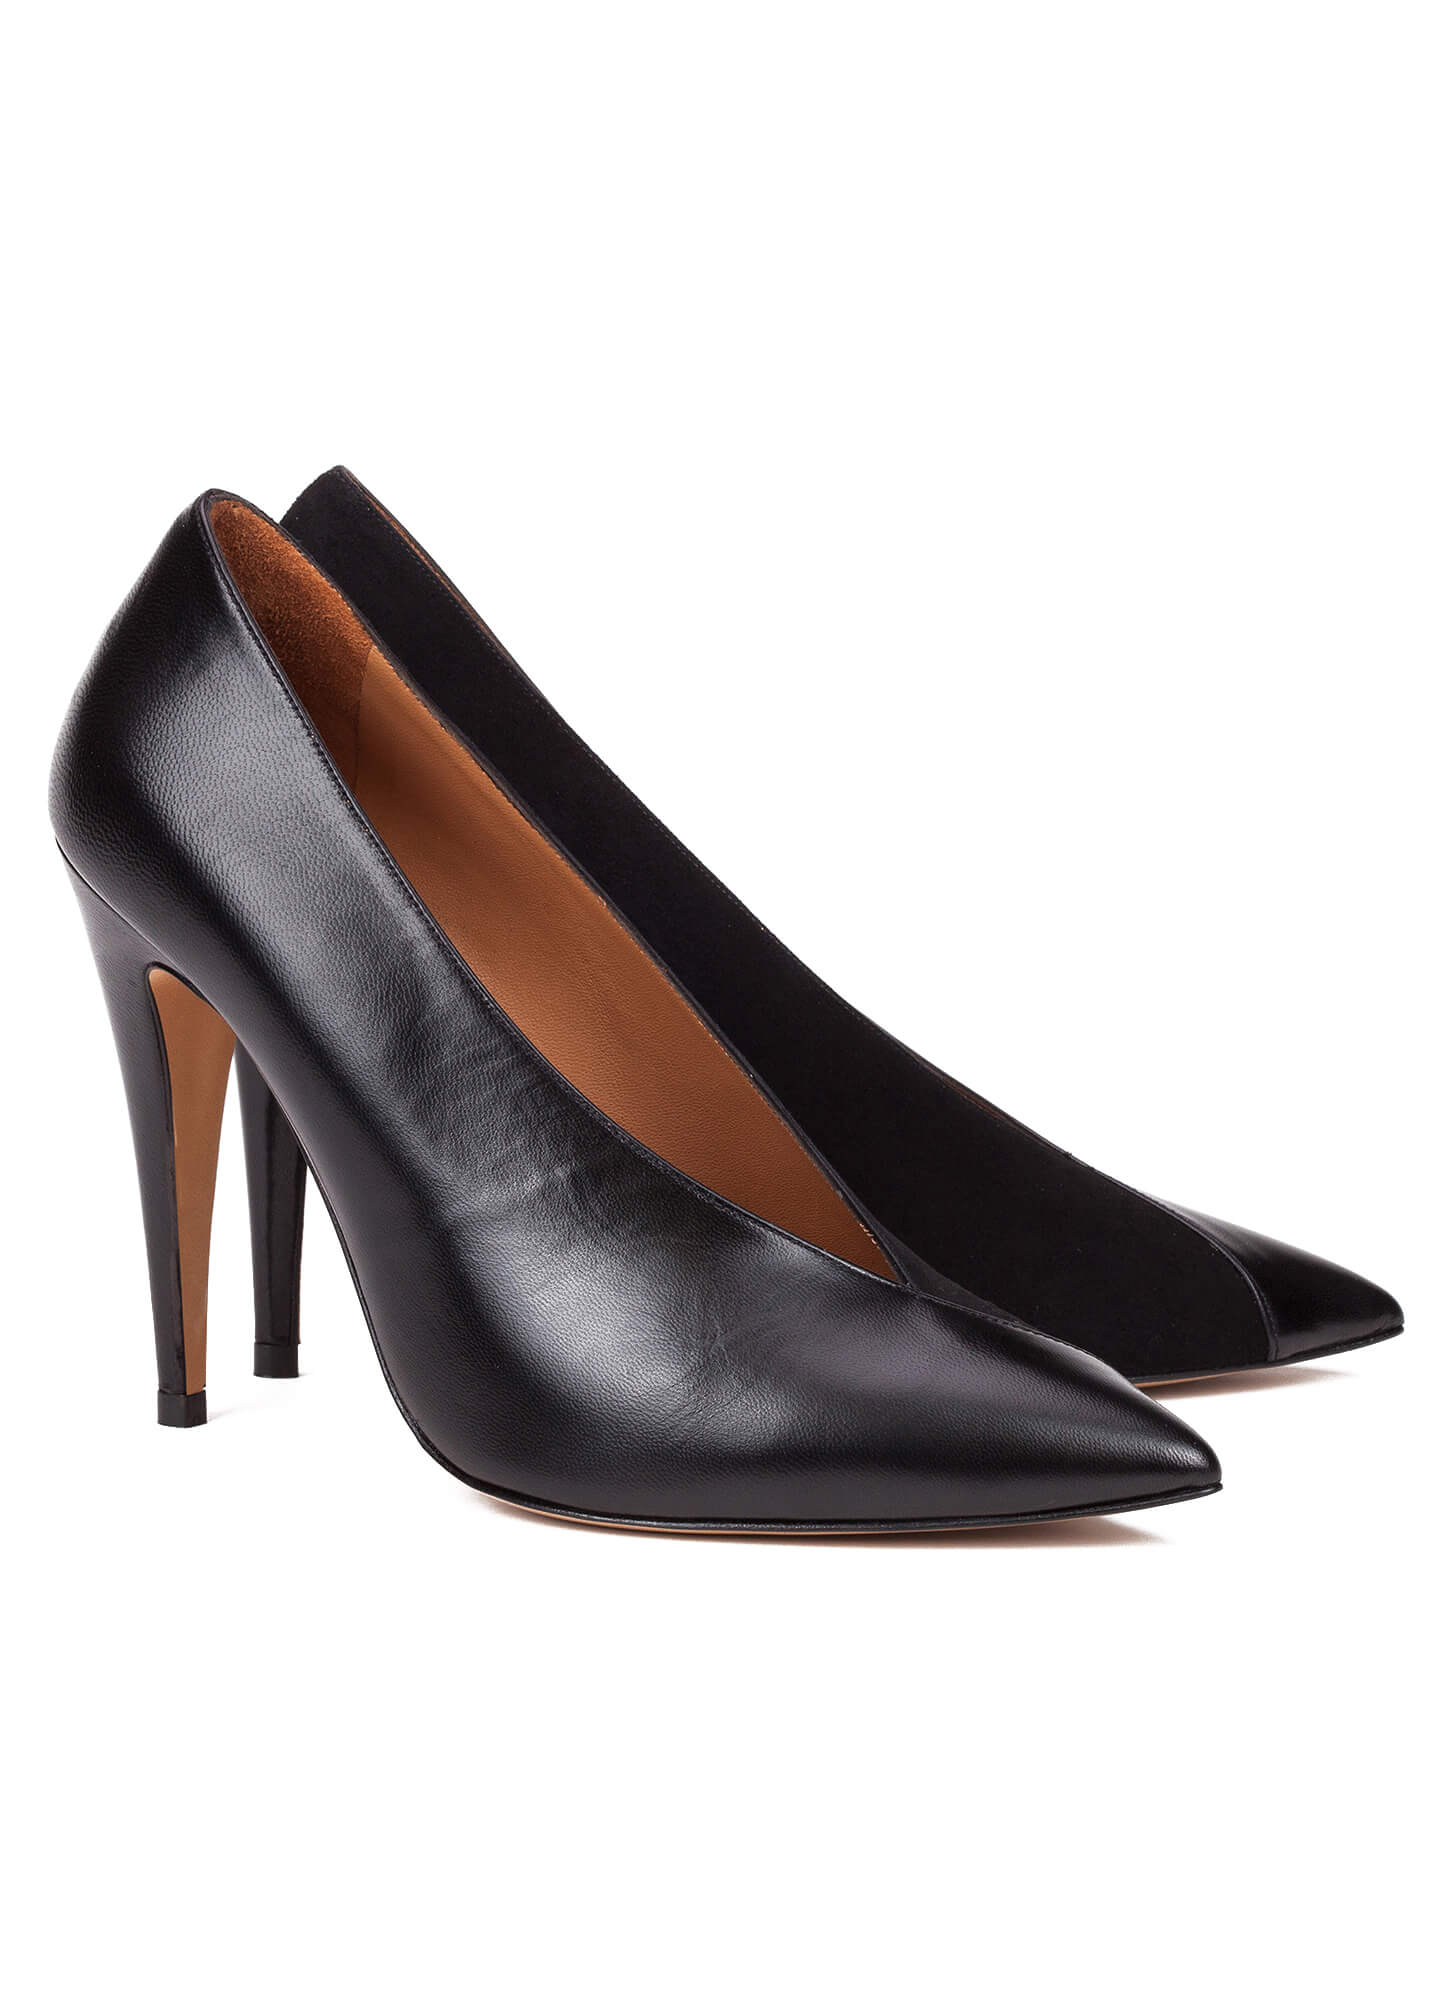 Burgundy V-cut high heel pumps - online shoe store Pura Lopez . PURA LOPEZ